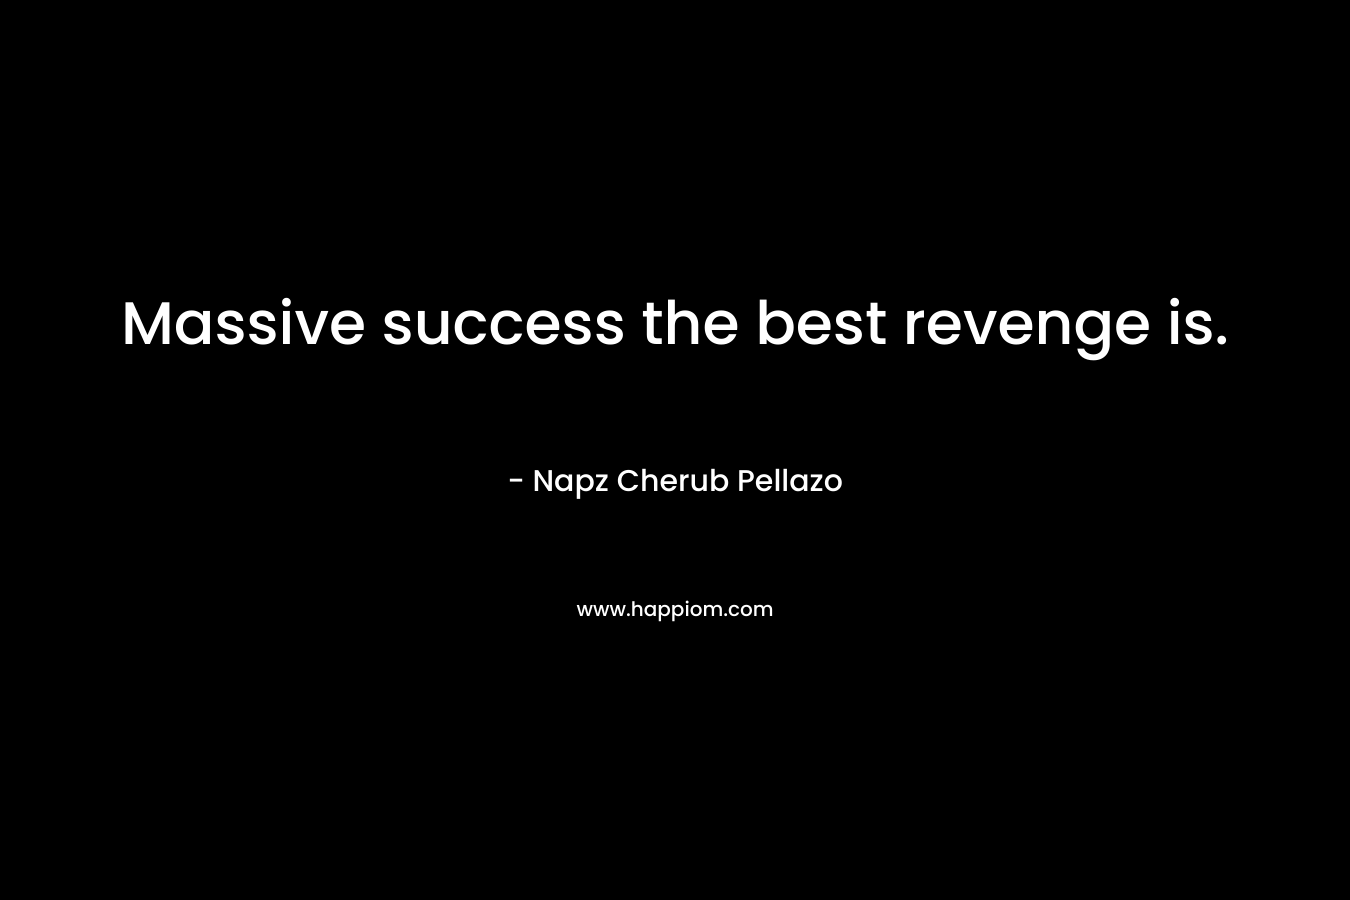 Massive success the best revenge is.